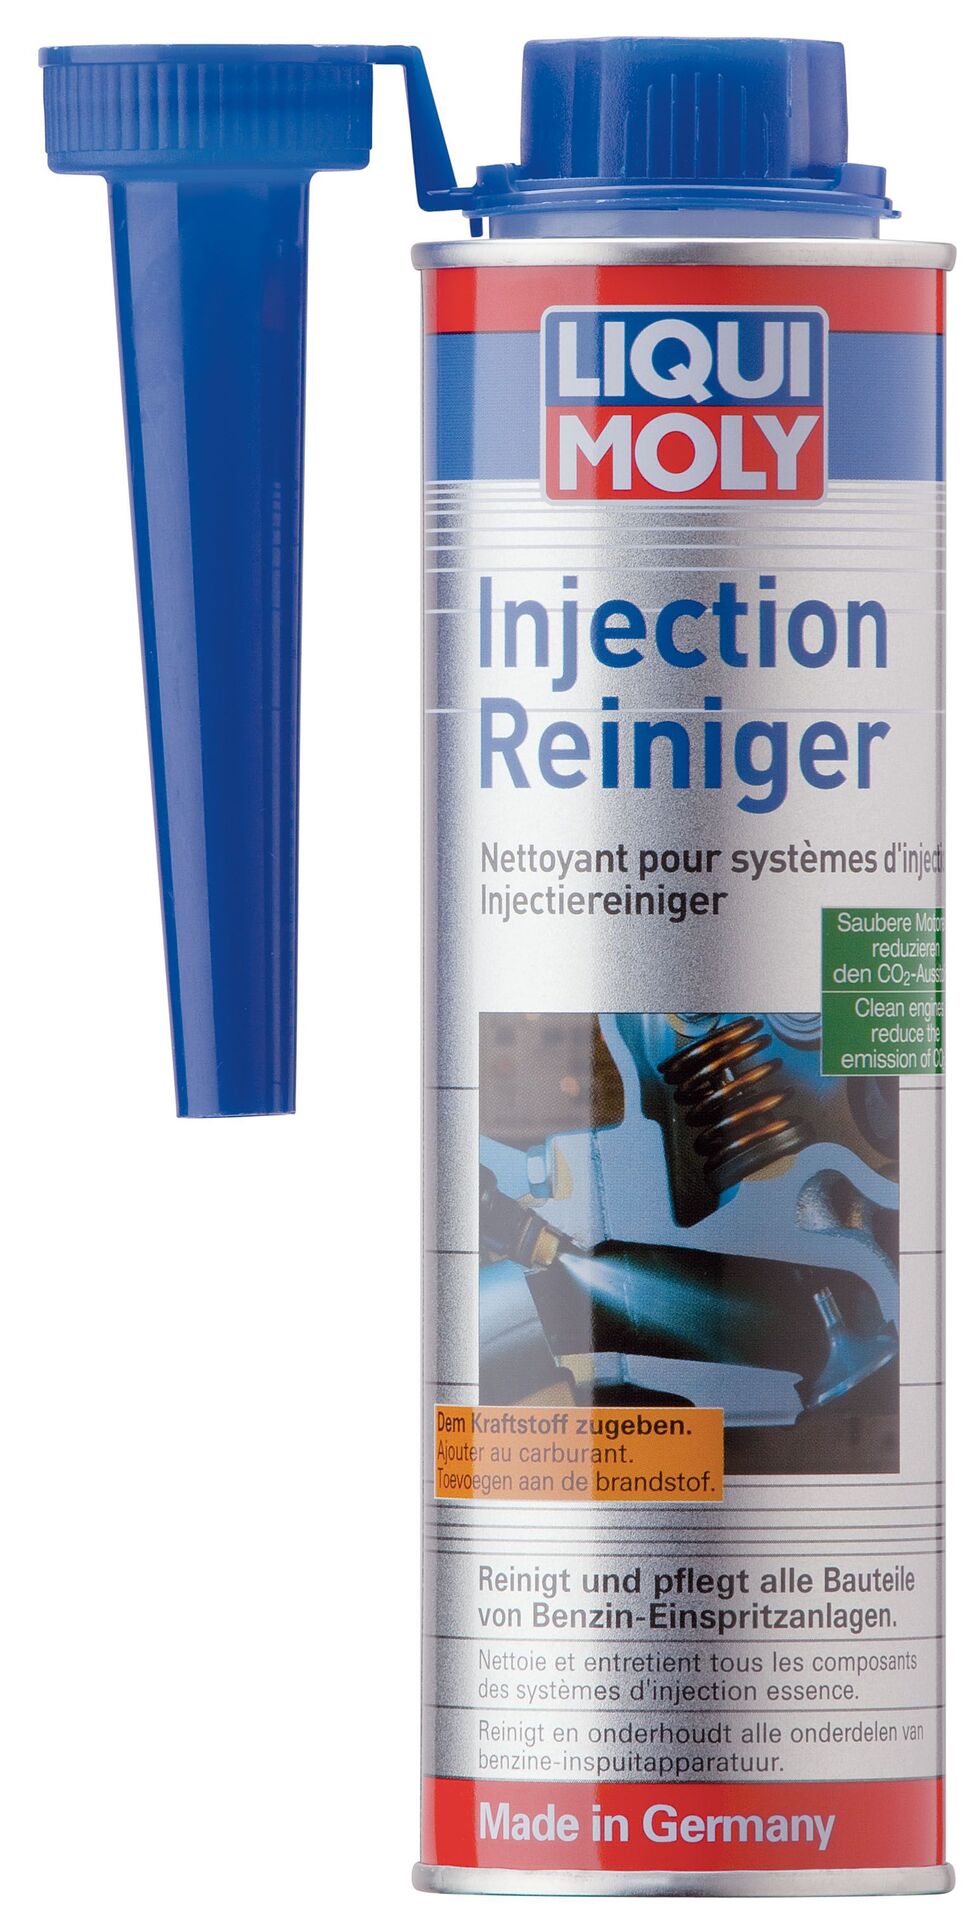 Injection-Reiniger